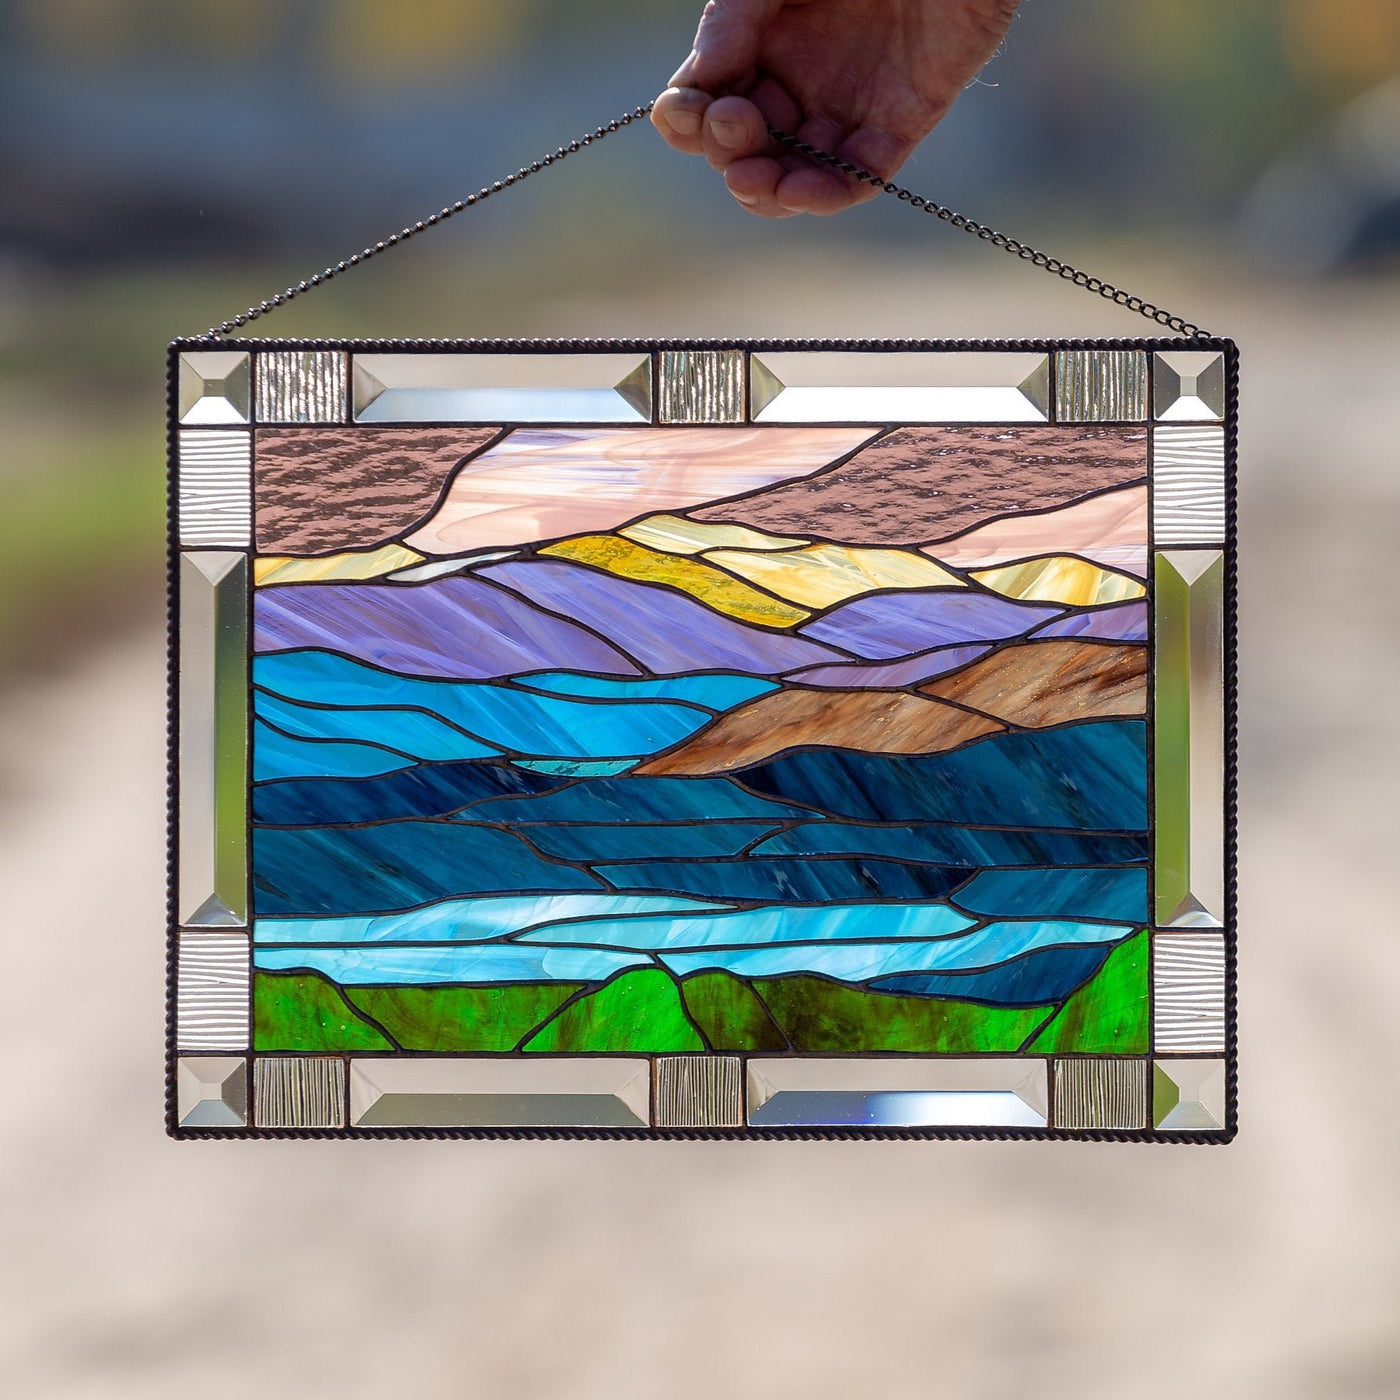 Mount Washington window hanging of stained glass